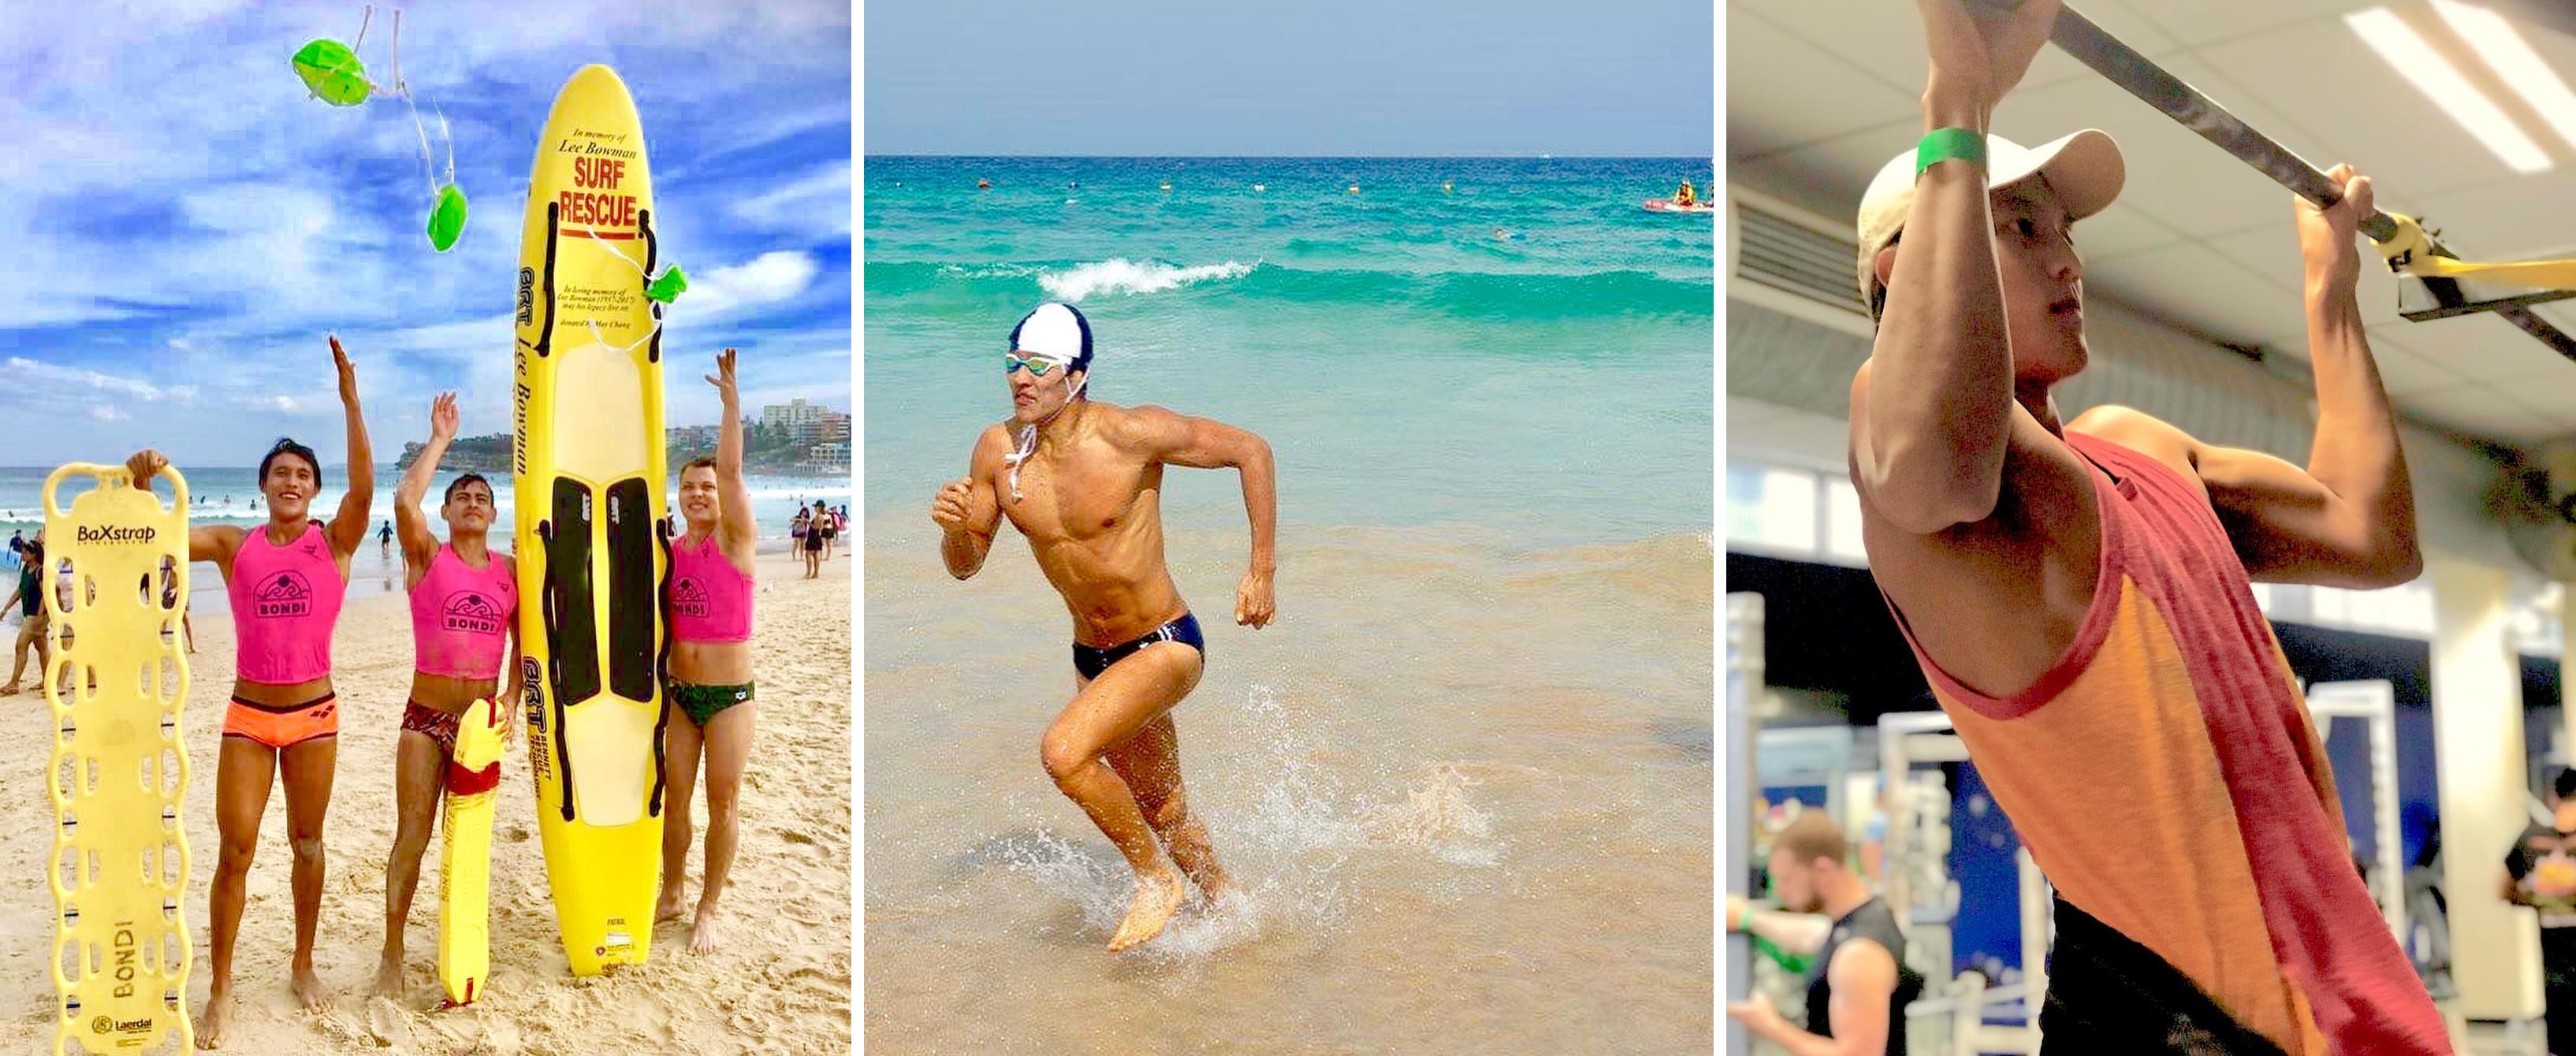 Xiang考取悉尼著名沙灘Bondi Beach的衝浪救援員資格。